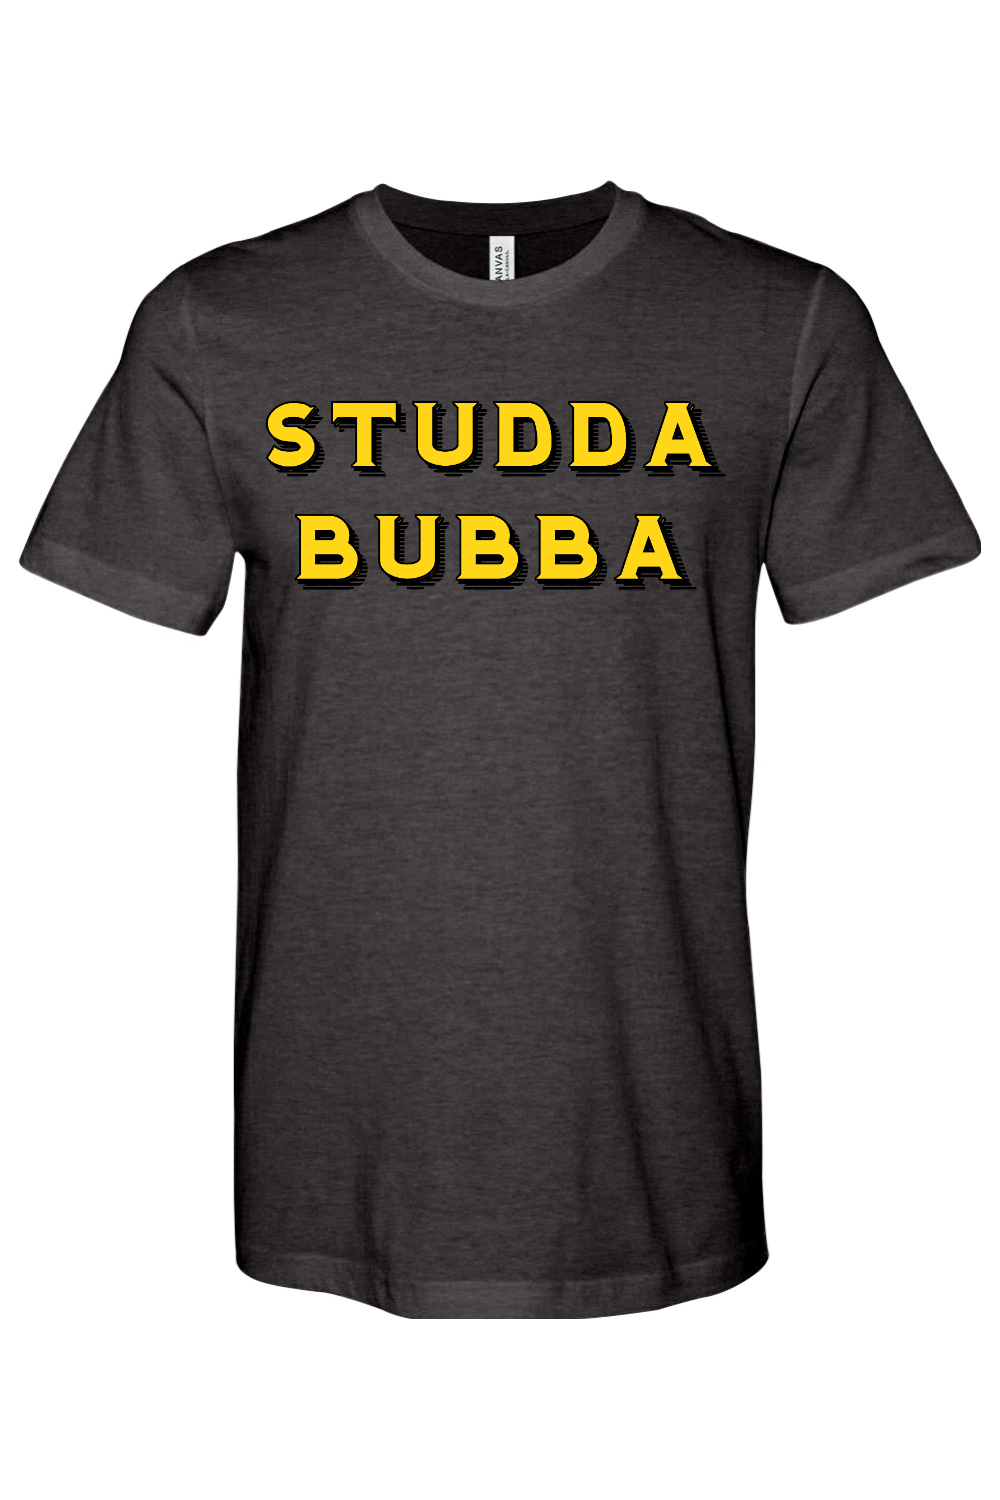 Studda Bubba - Bella + Canvas Heathered Jersey Tee - Yinzylvania